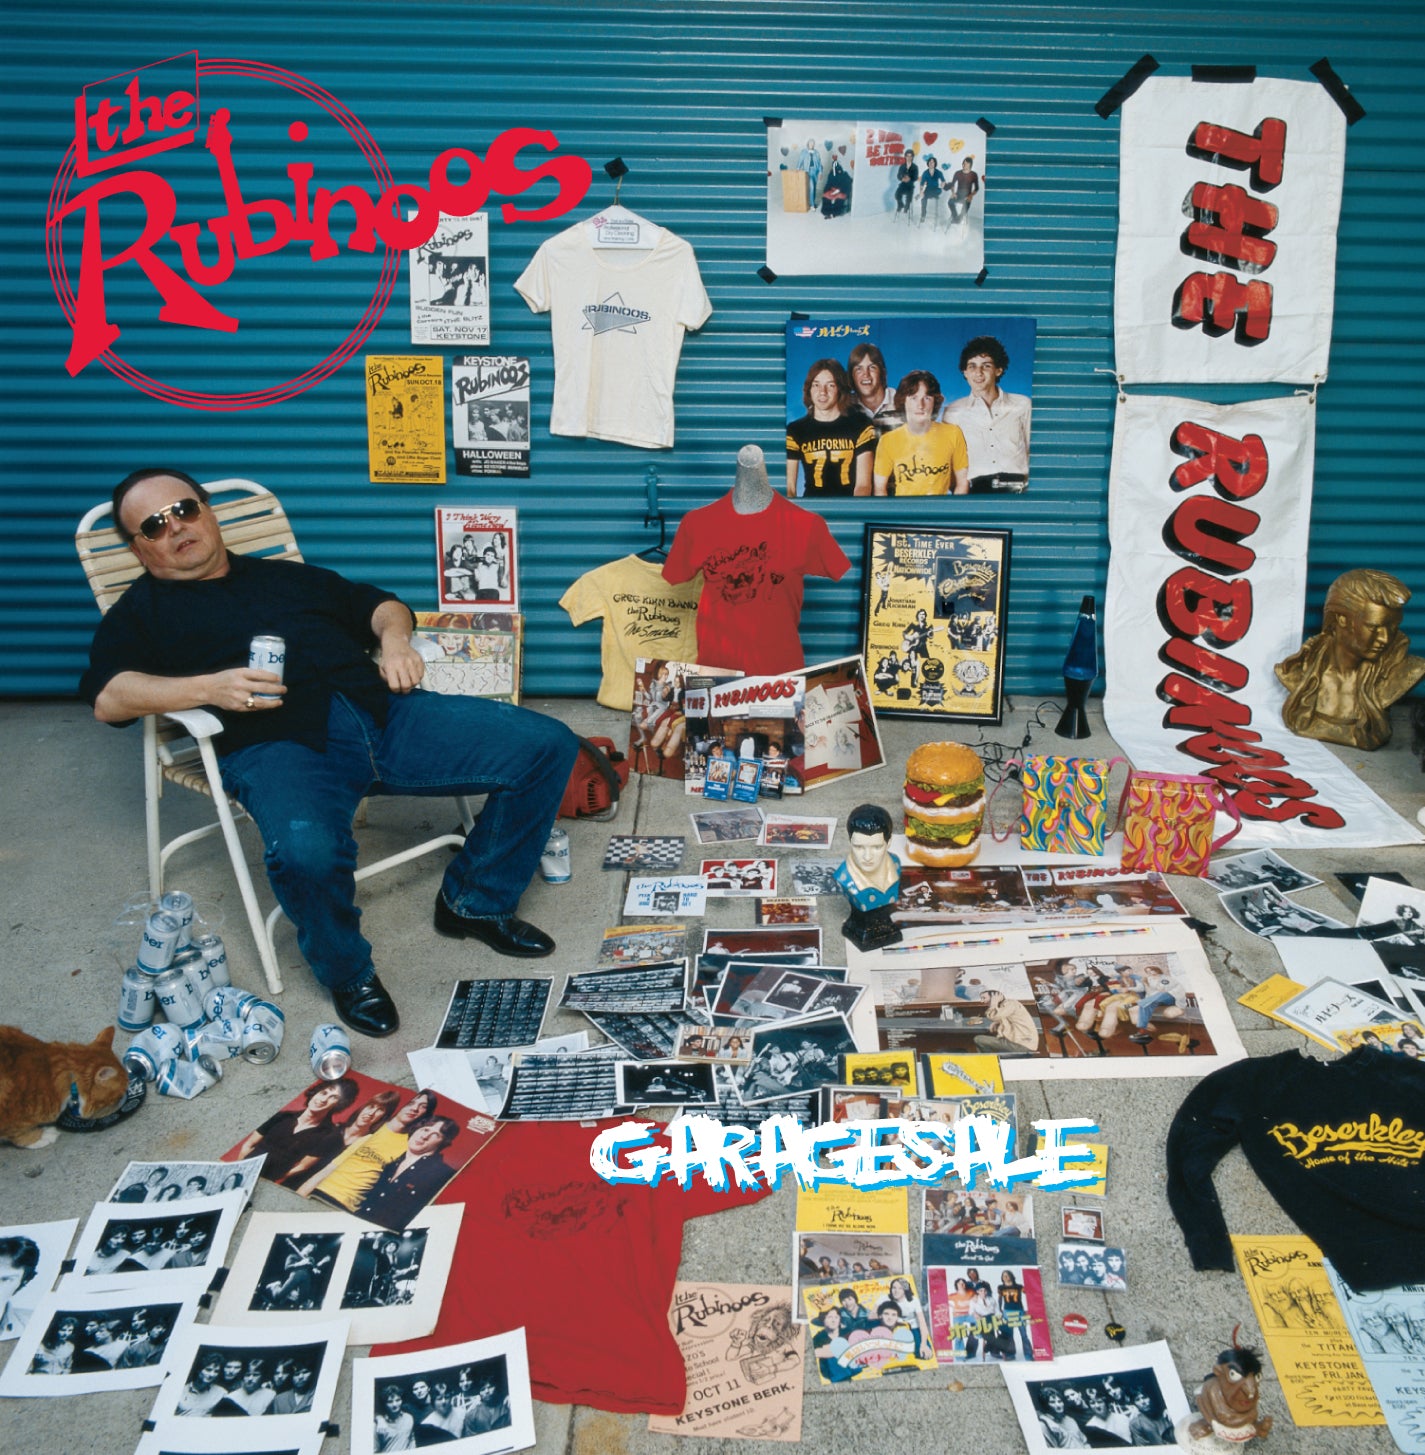 Rubinoos - Garage Sale (Deluxe Japanese Edition)